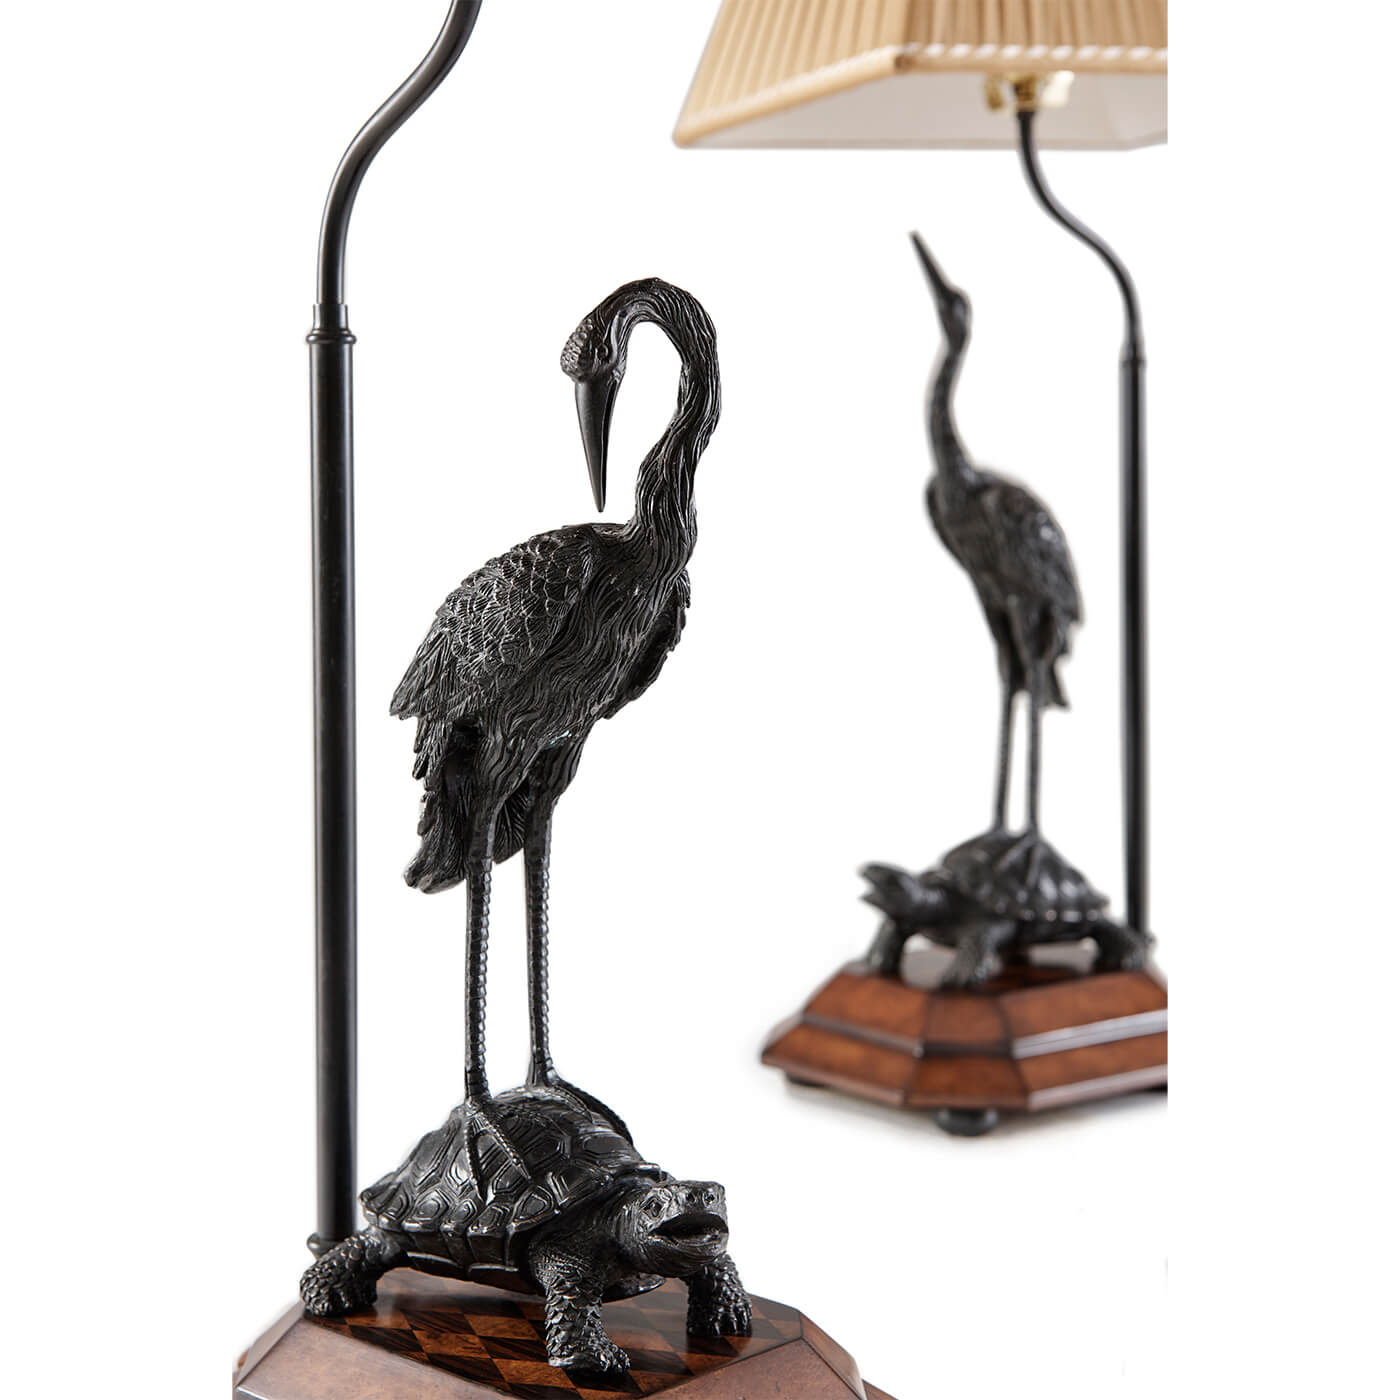 Pair of Crane Form Table Lamps - English Georgian America